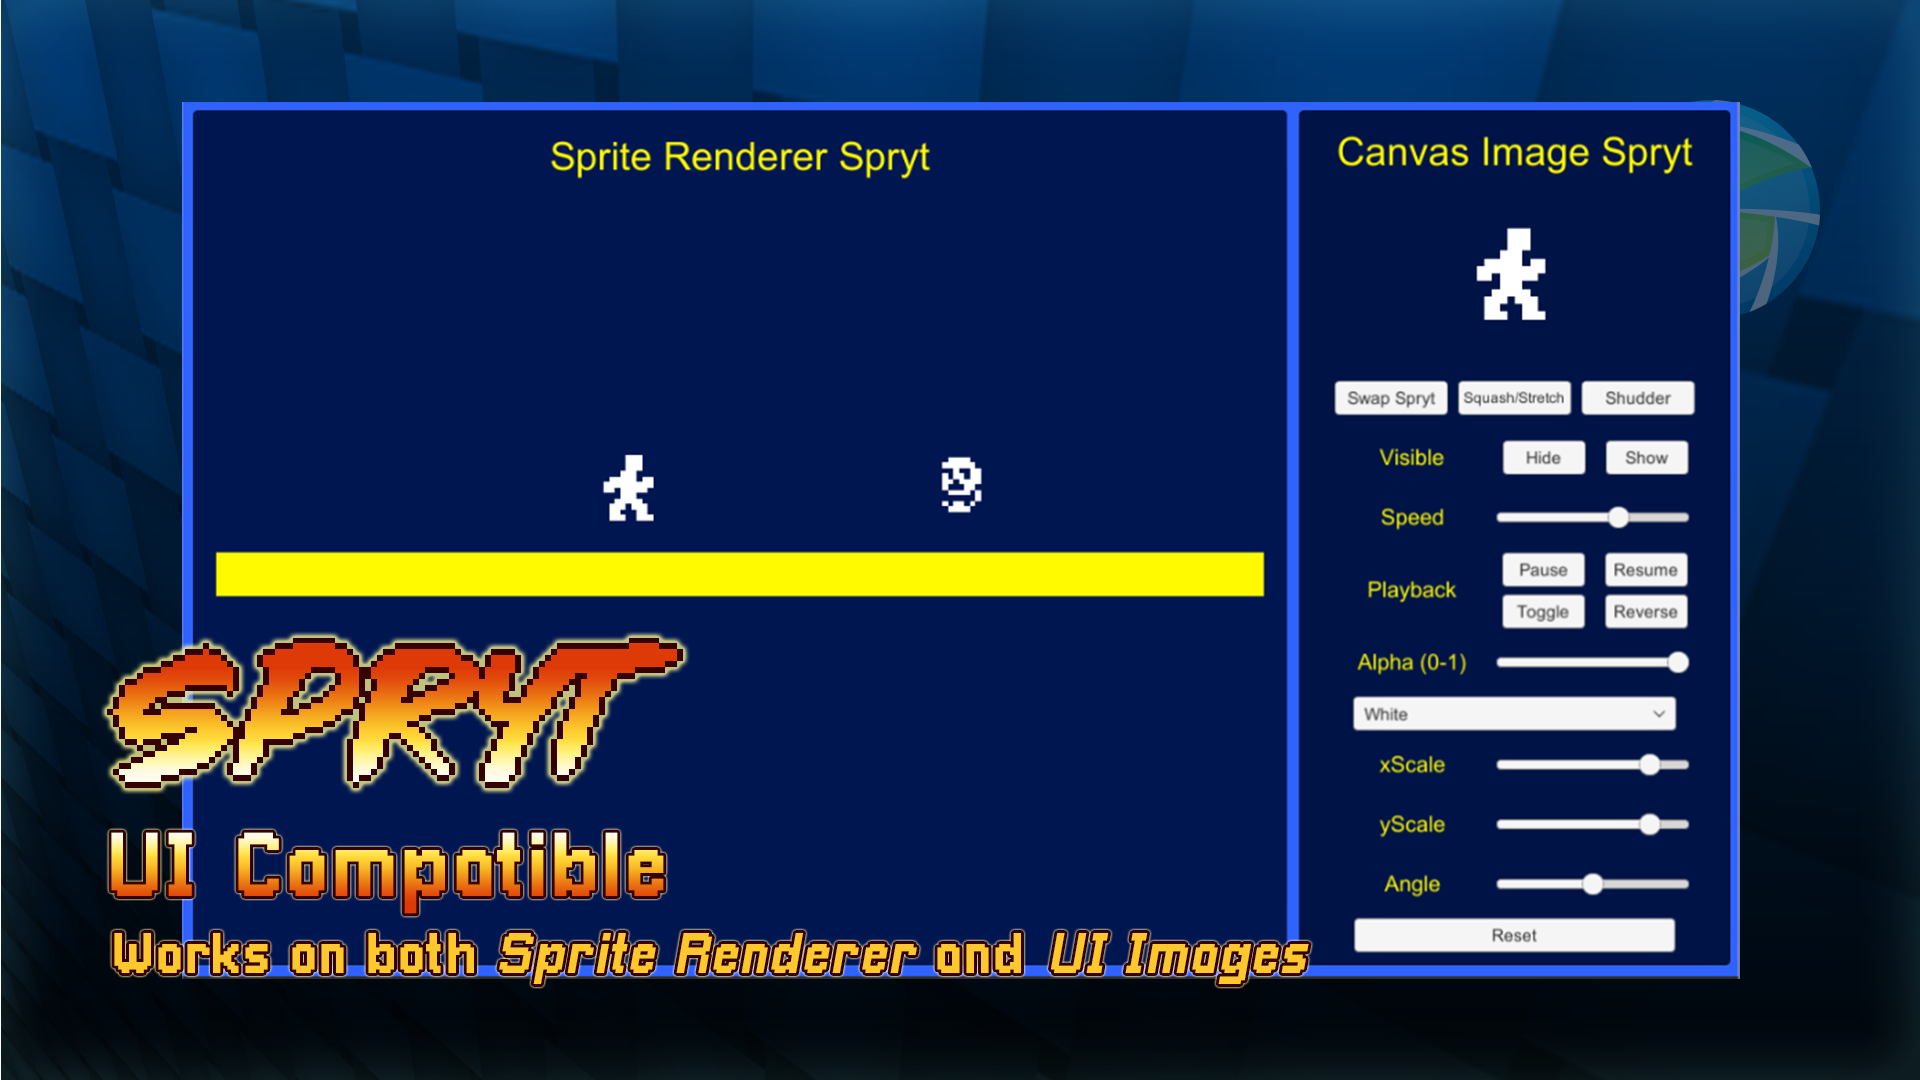 Spryt Promo Images 2 UI Compatible.png